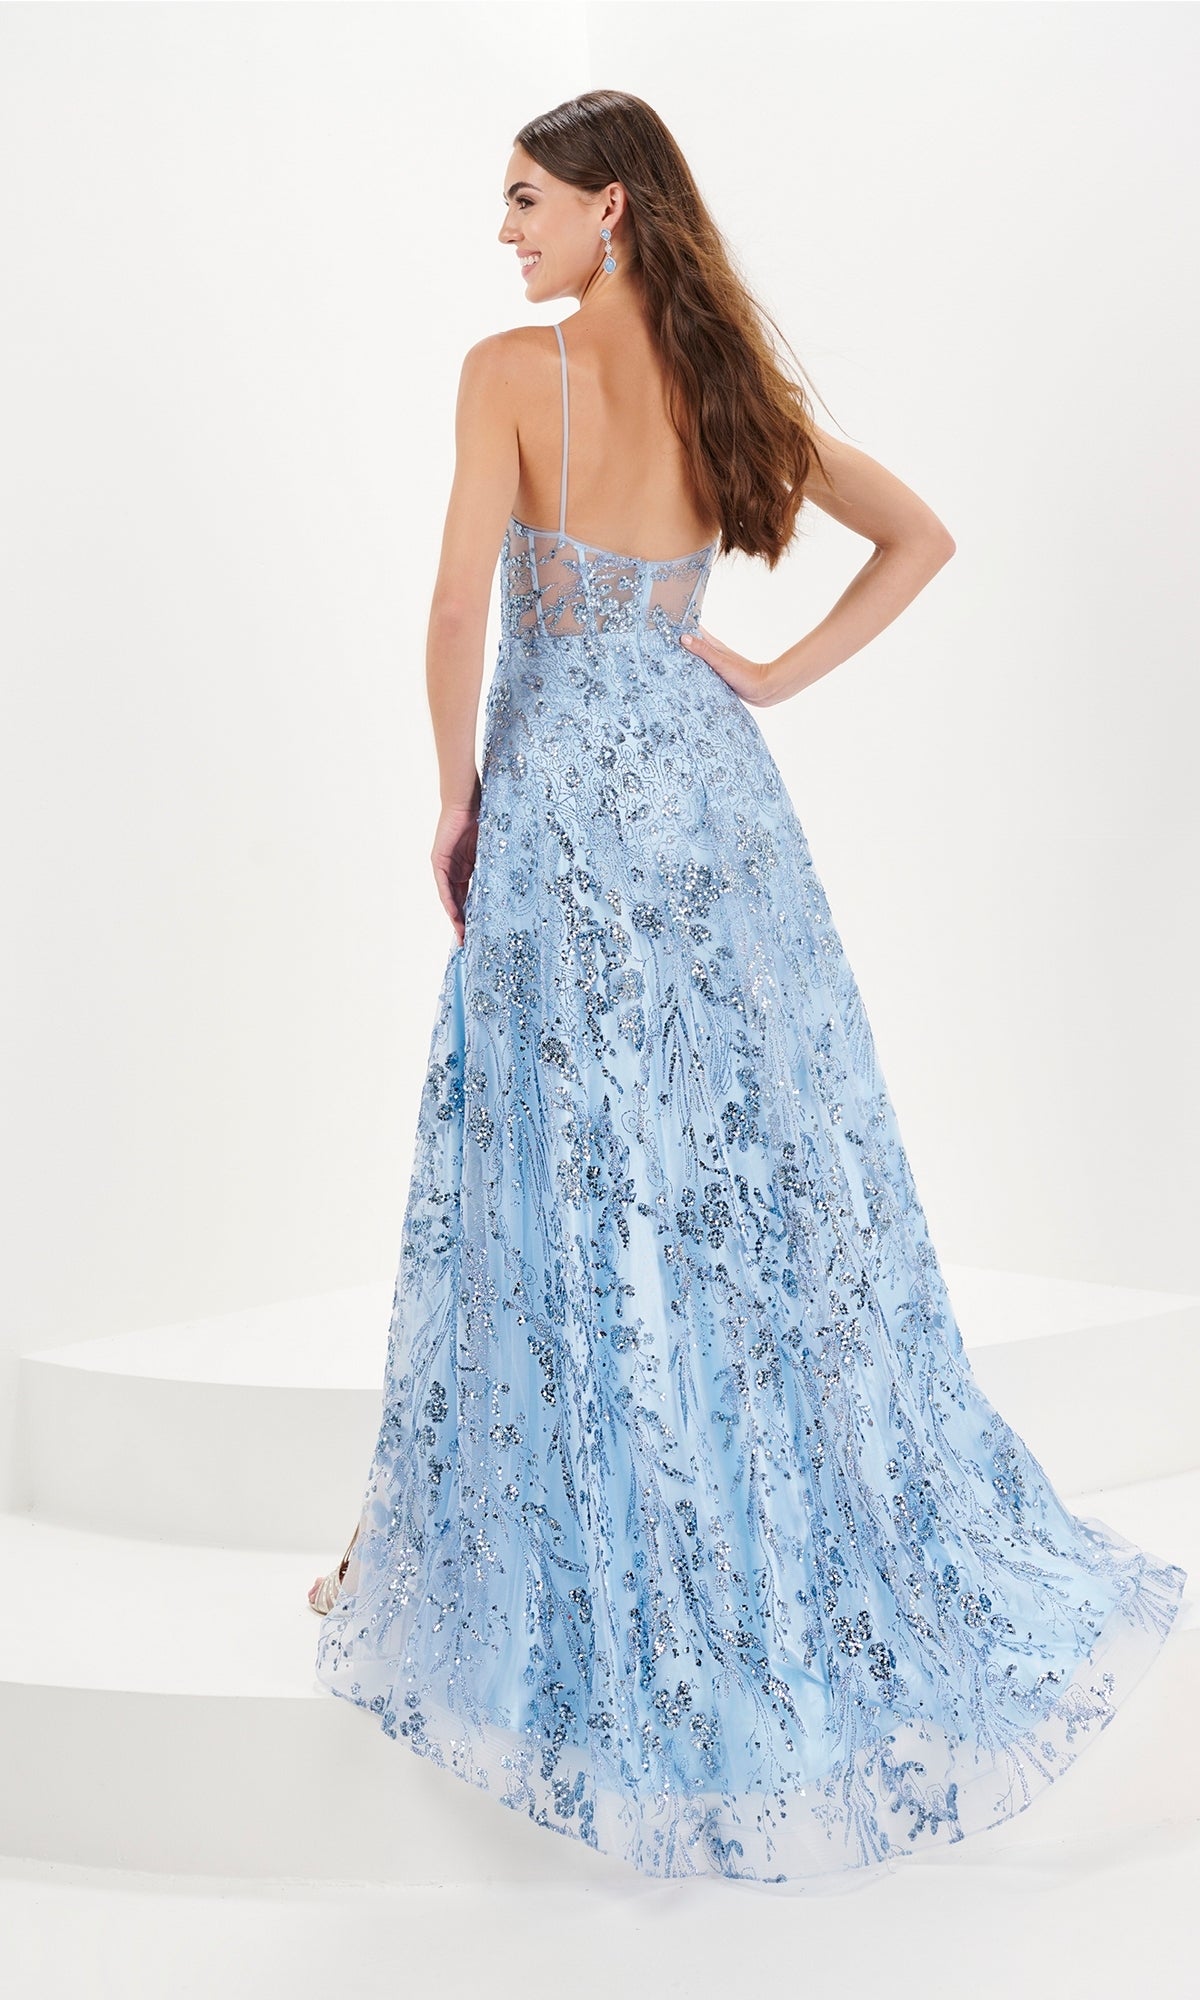 Long Prom Dress 16097 by Tiffany